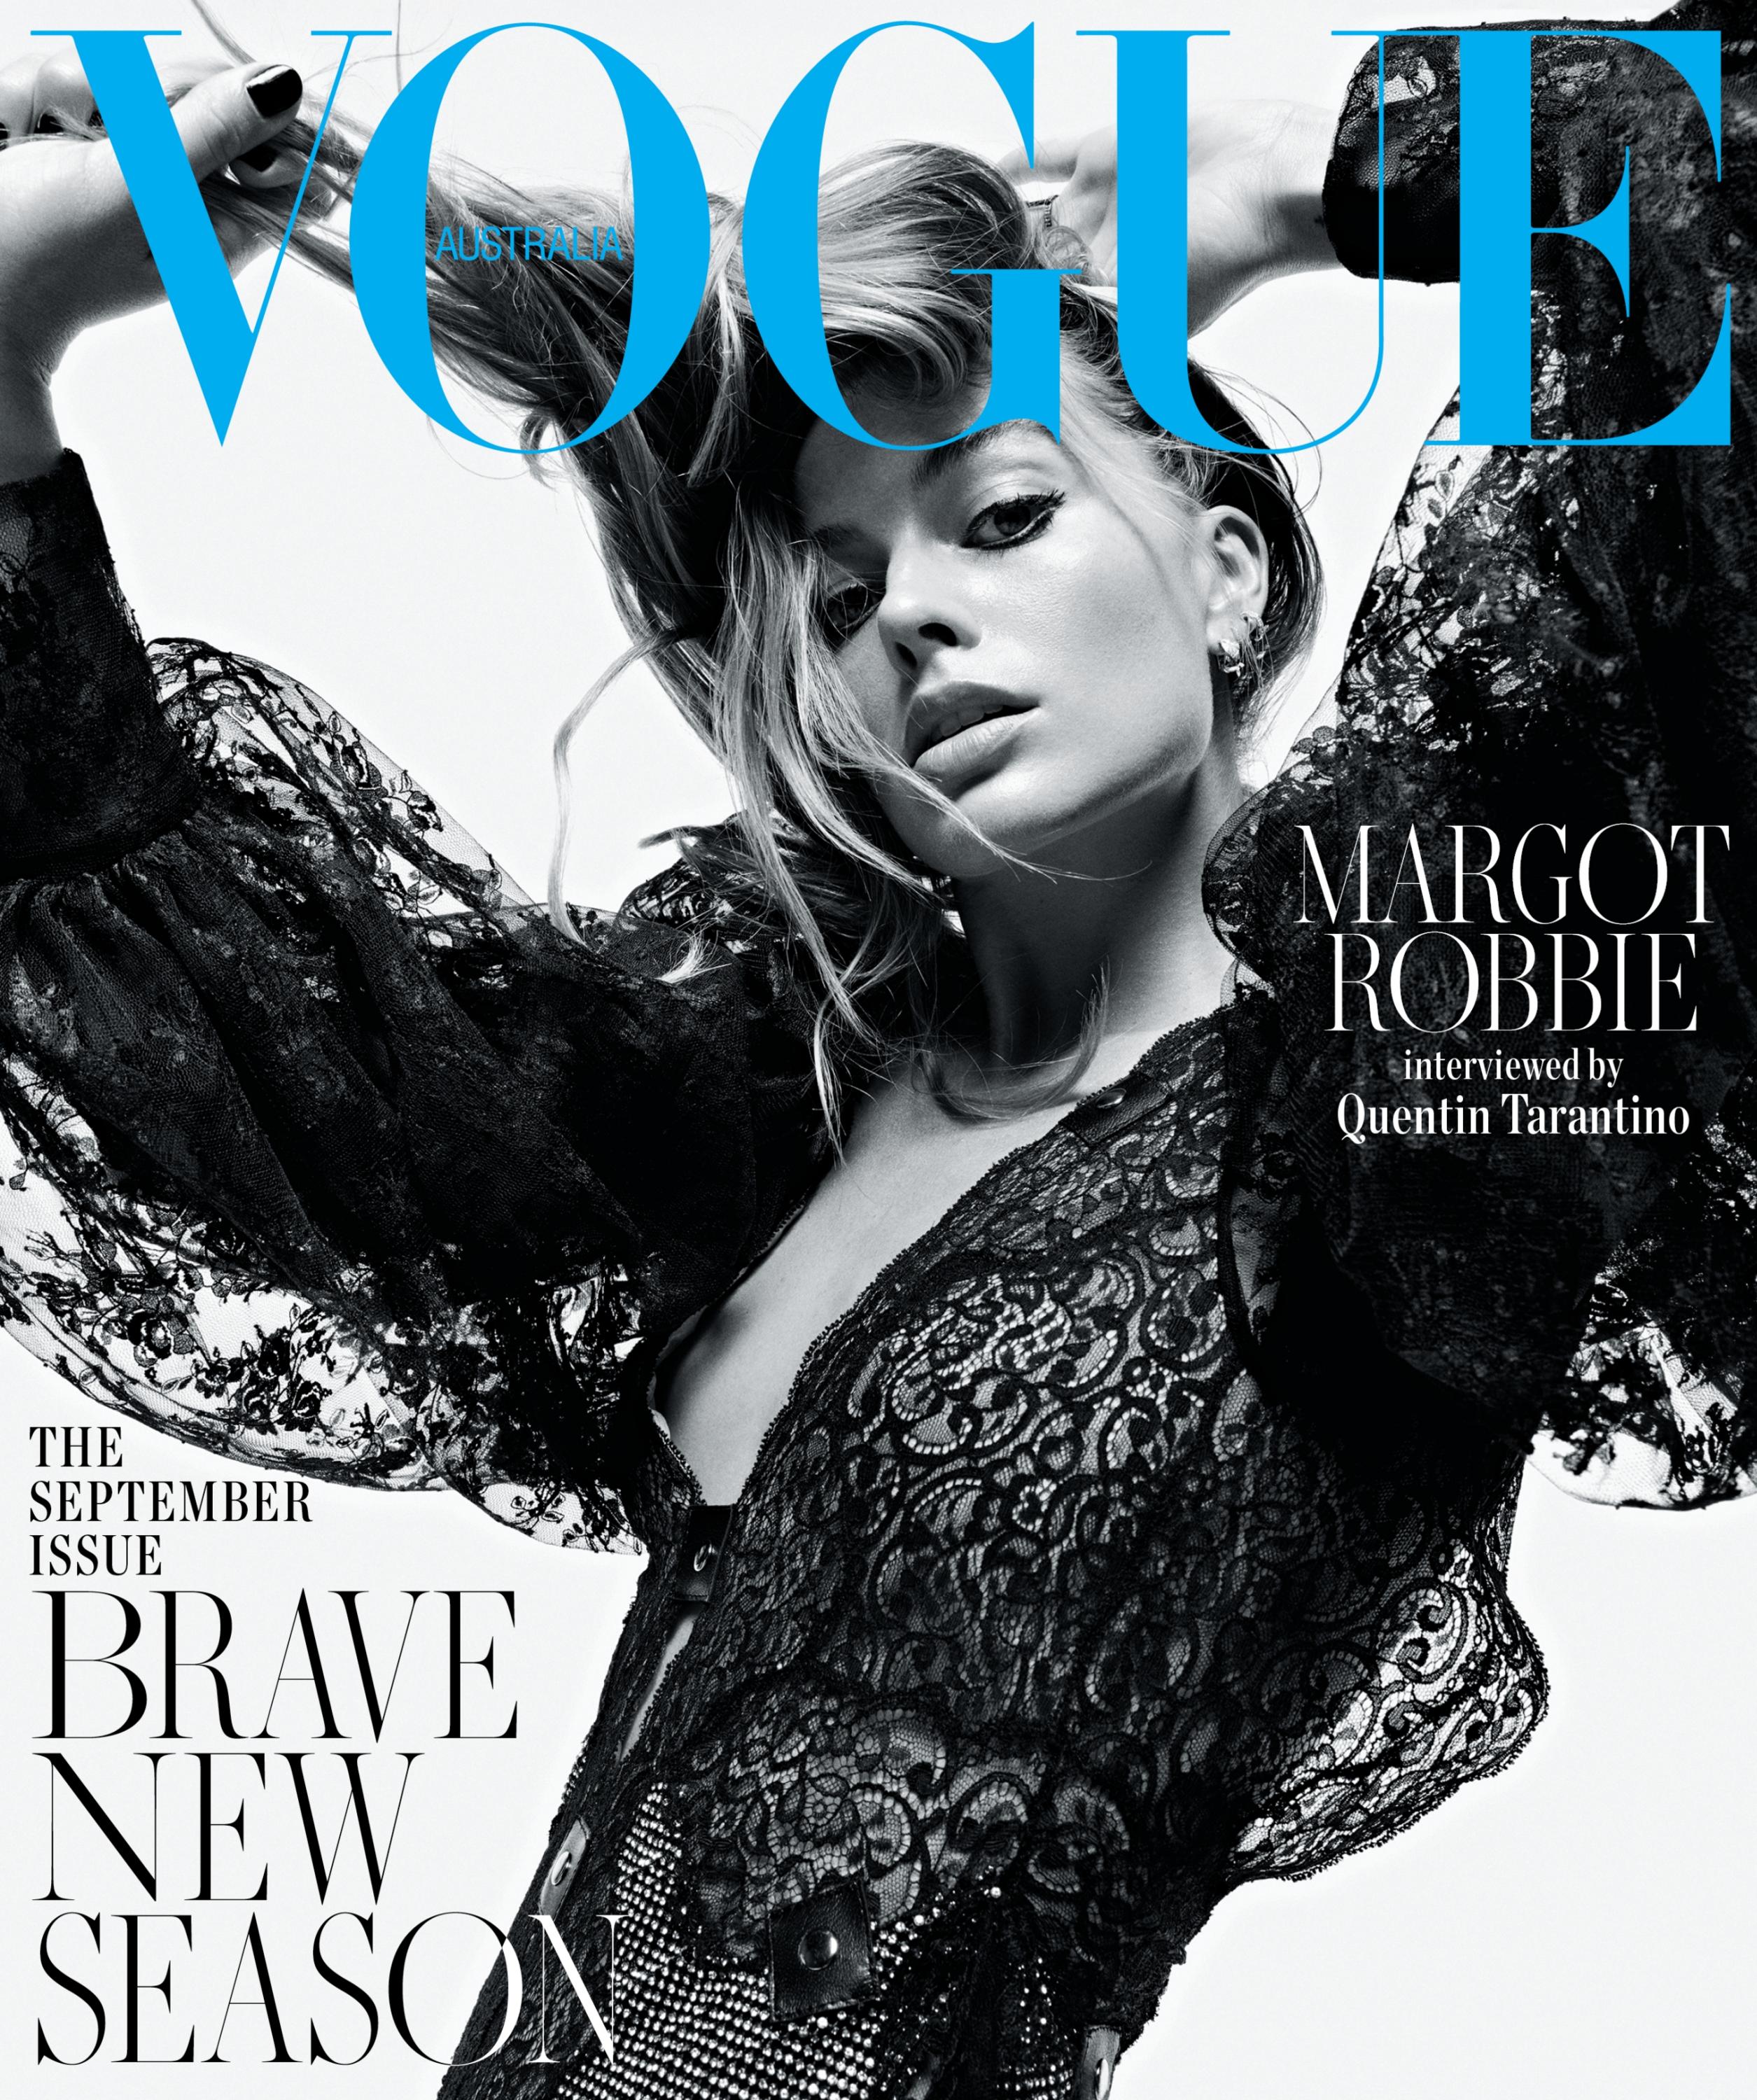 Vogue Australia senior fashion editor Christine Centenera wears a